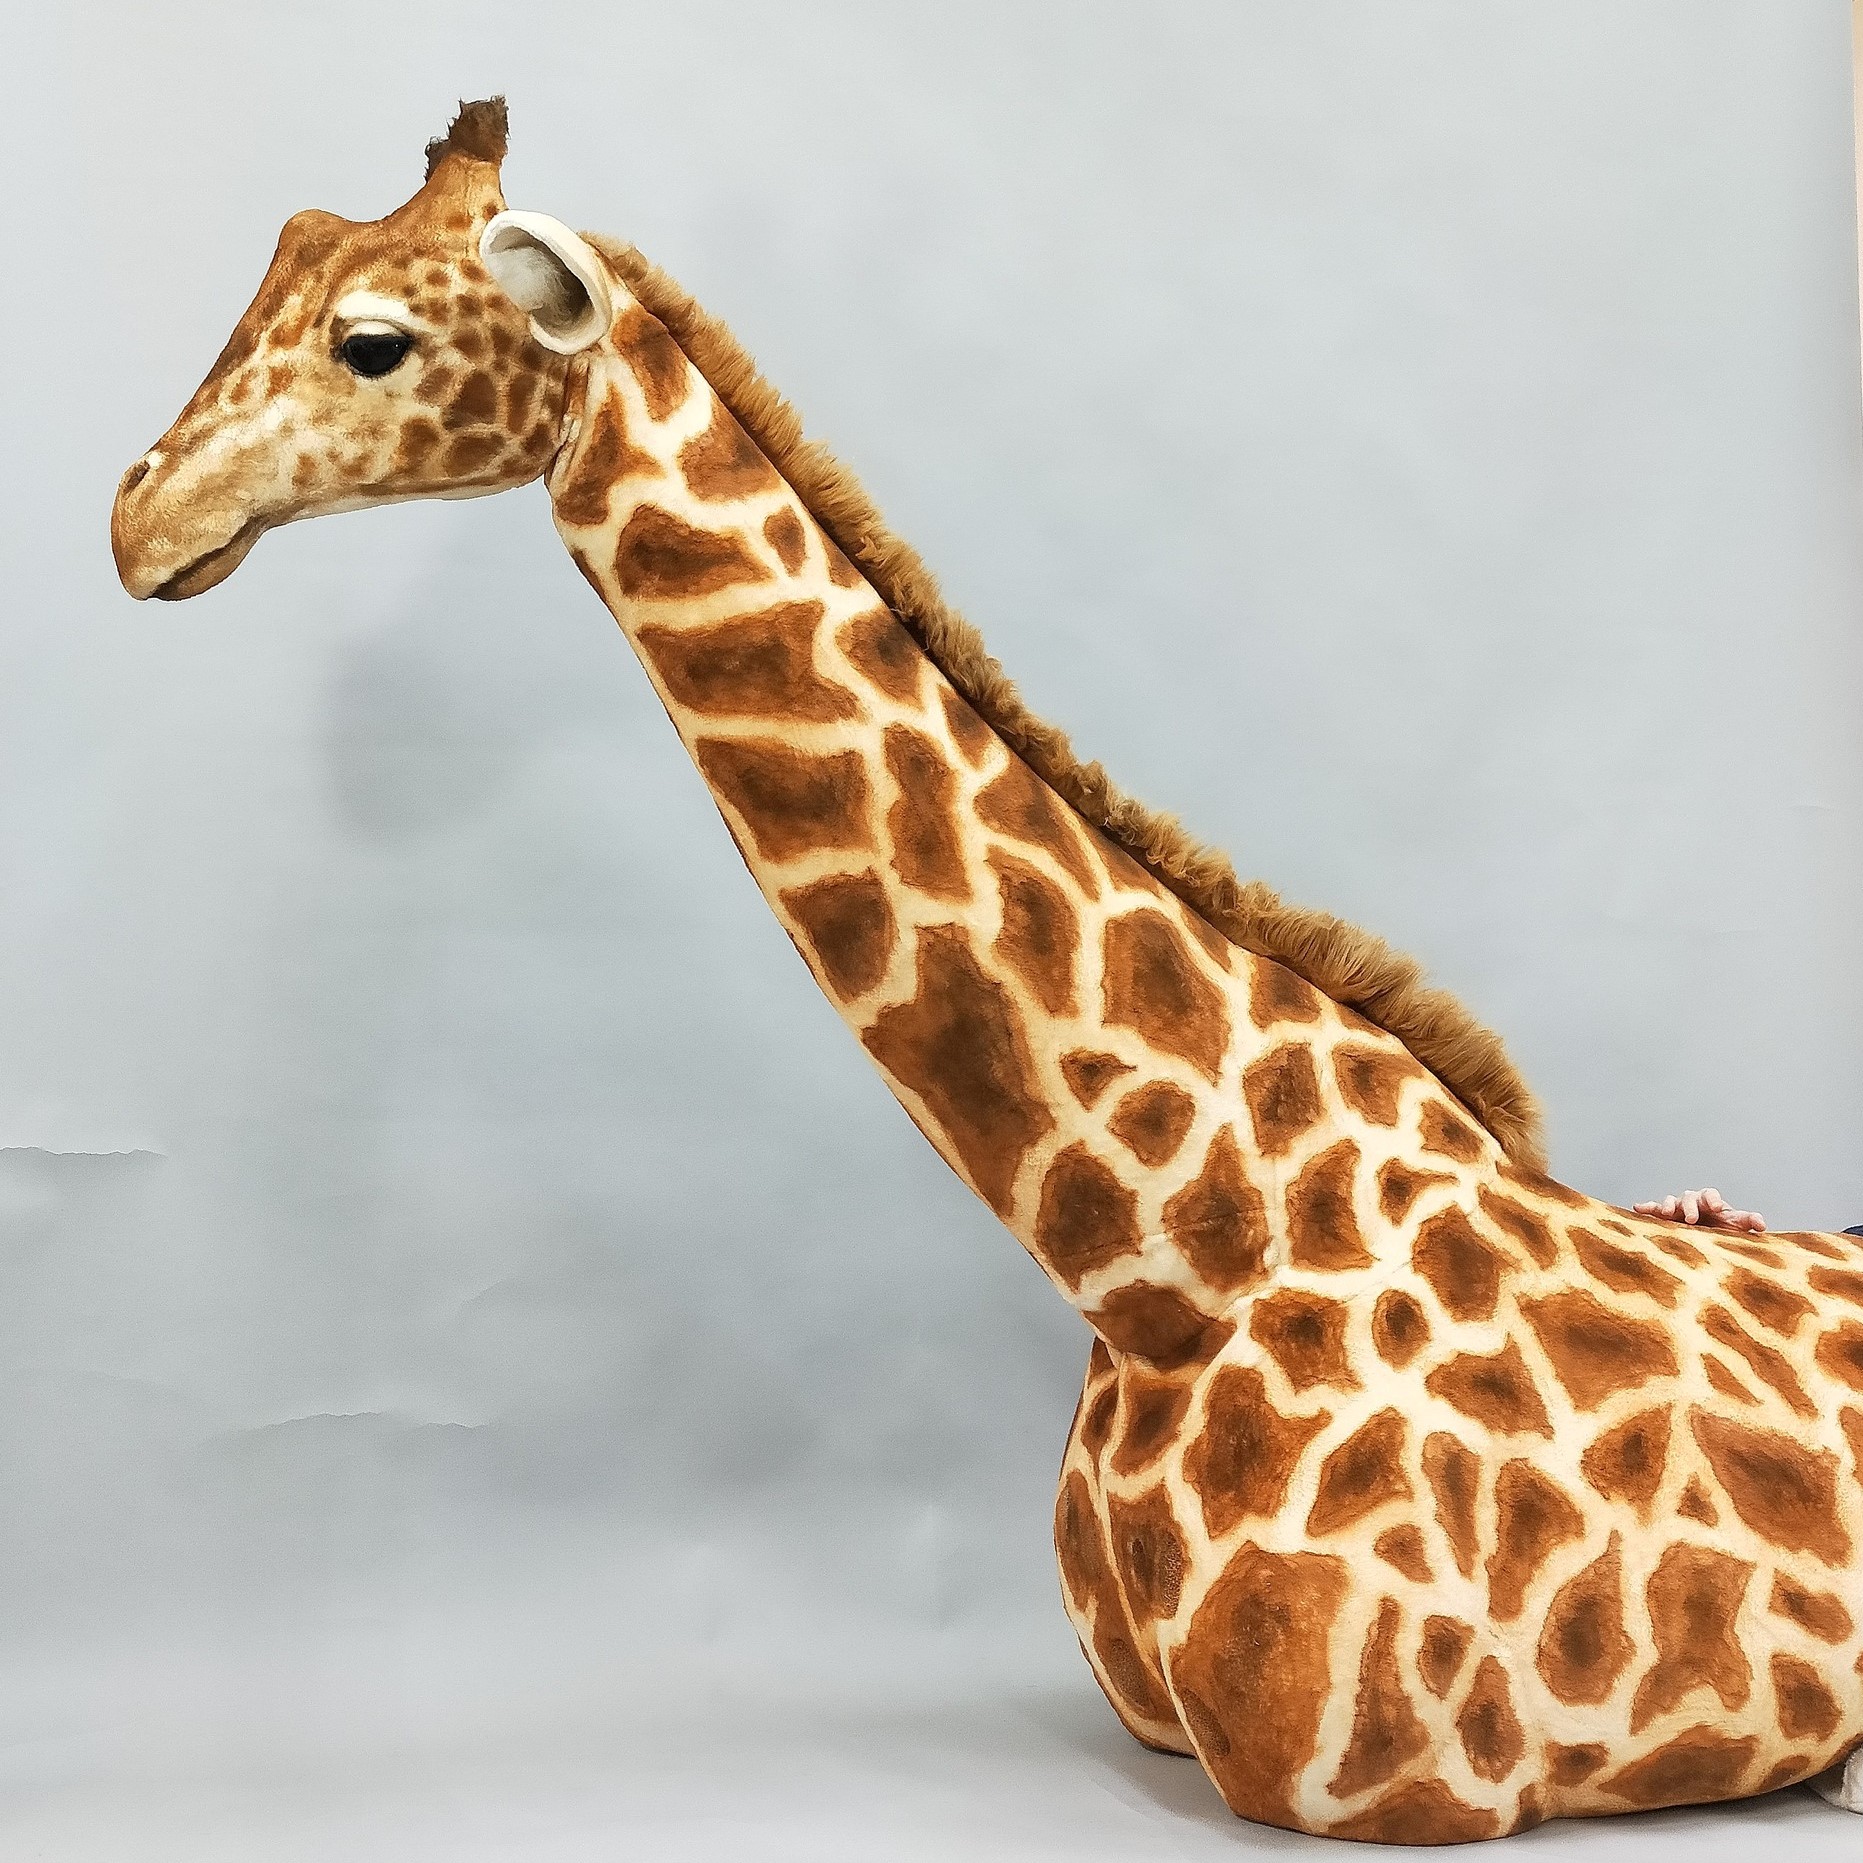 2020魔人社 法國音樂劇 Noé, la force de vivre 長頸鹿人偶裝製作 animatronic life-size giraffe costume puppet